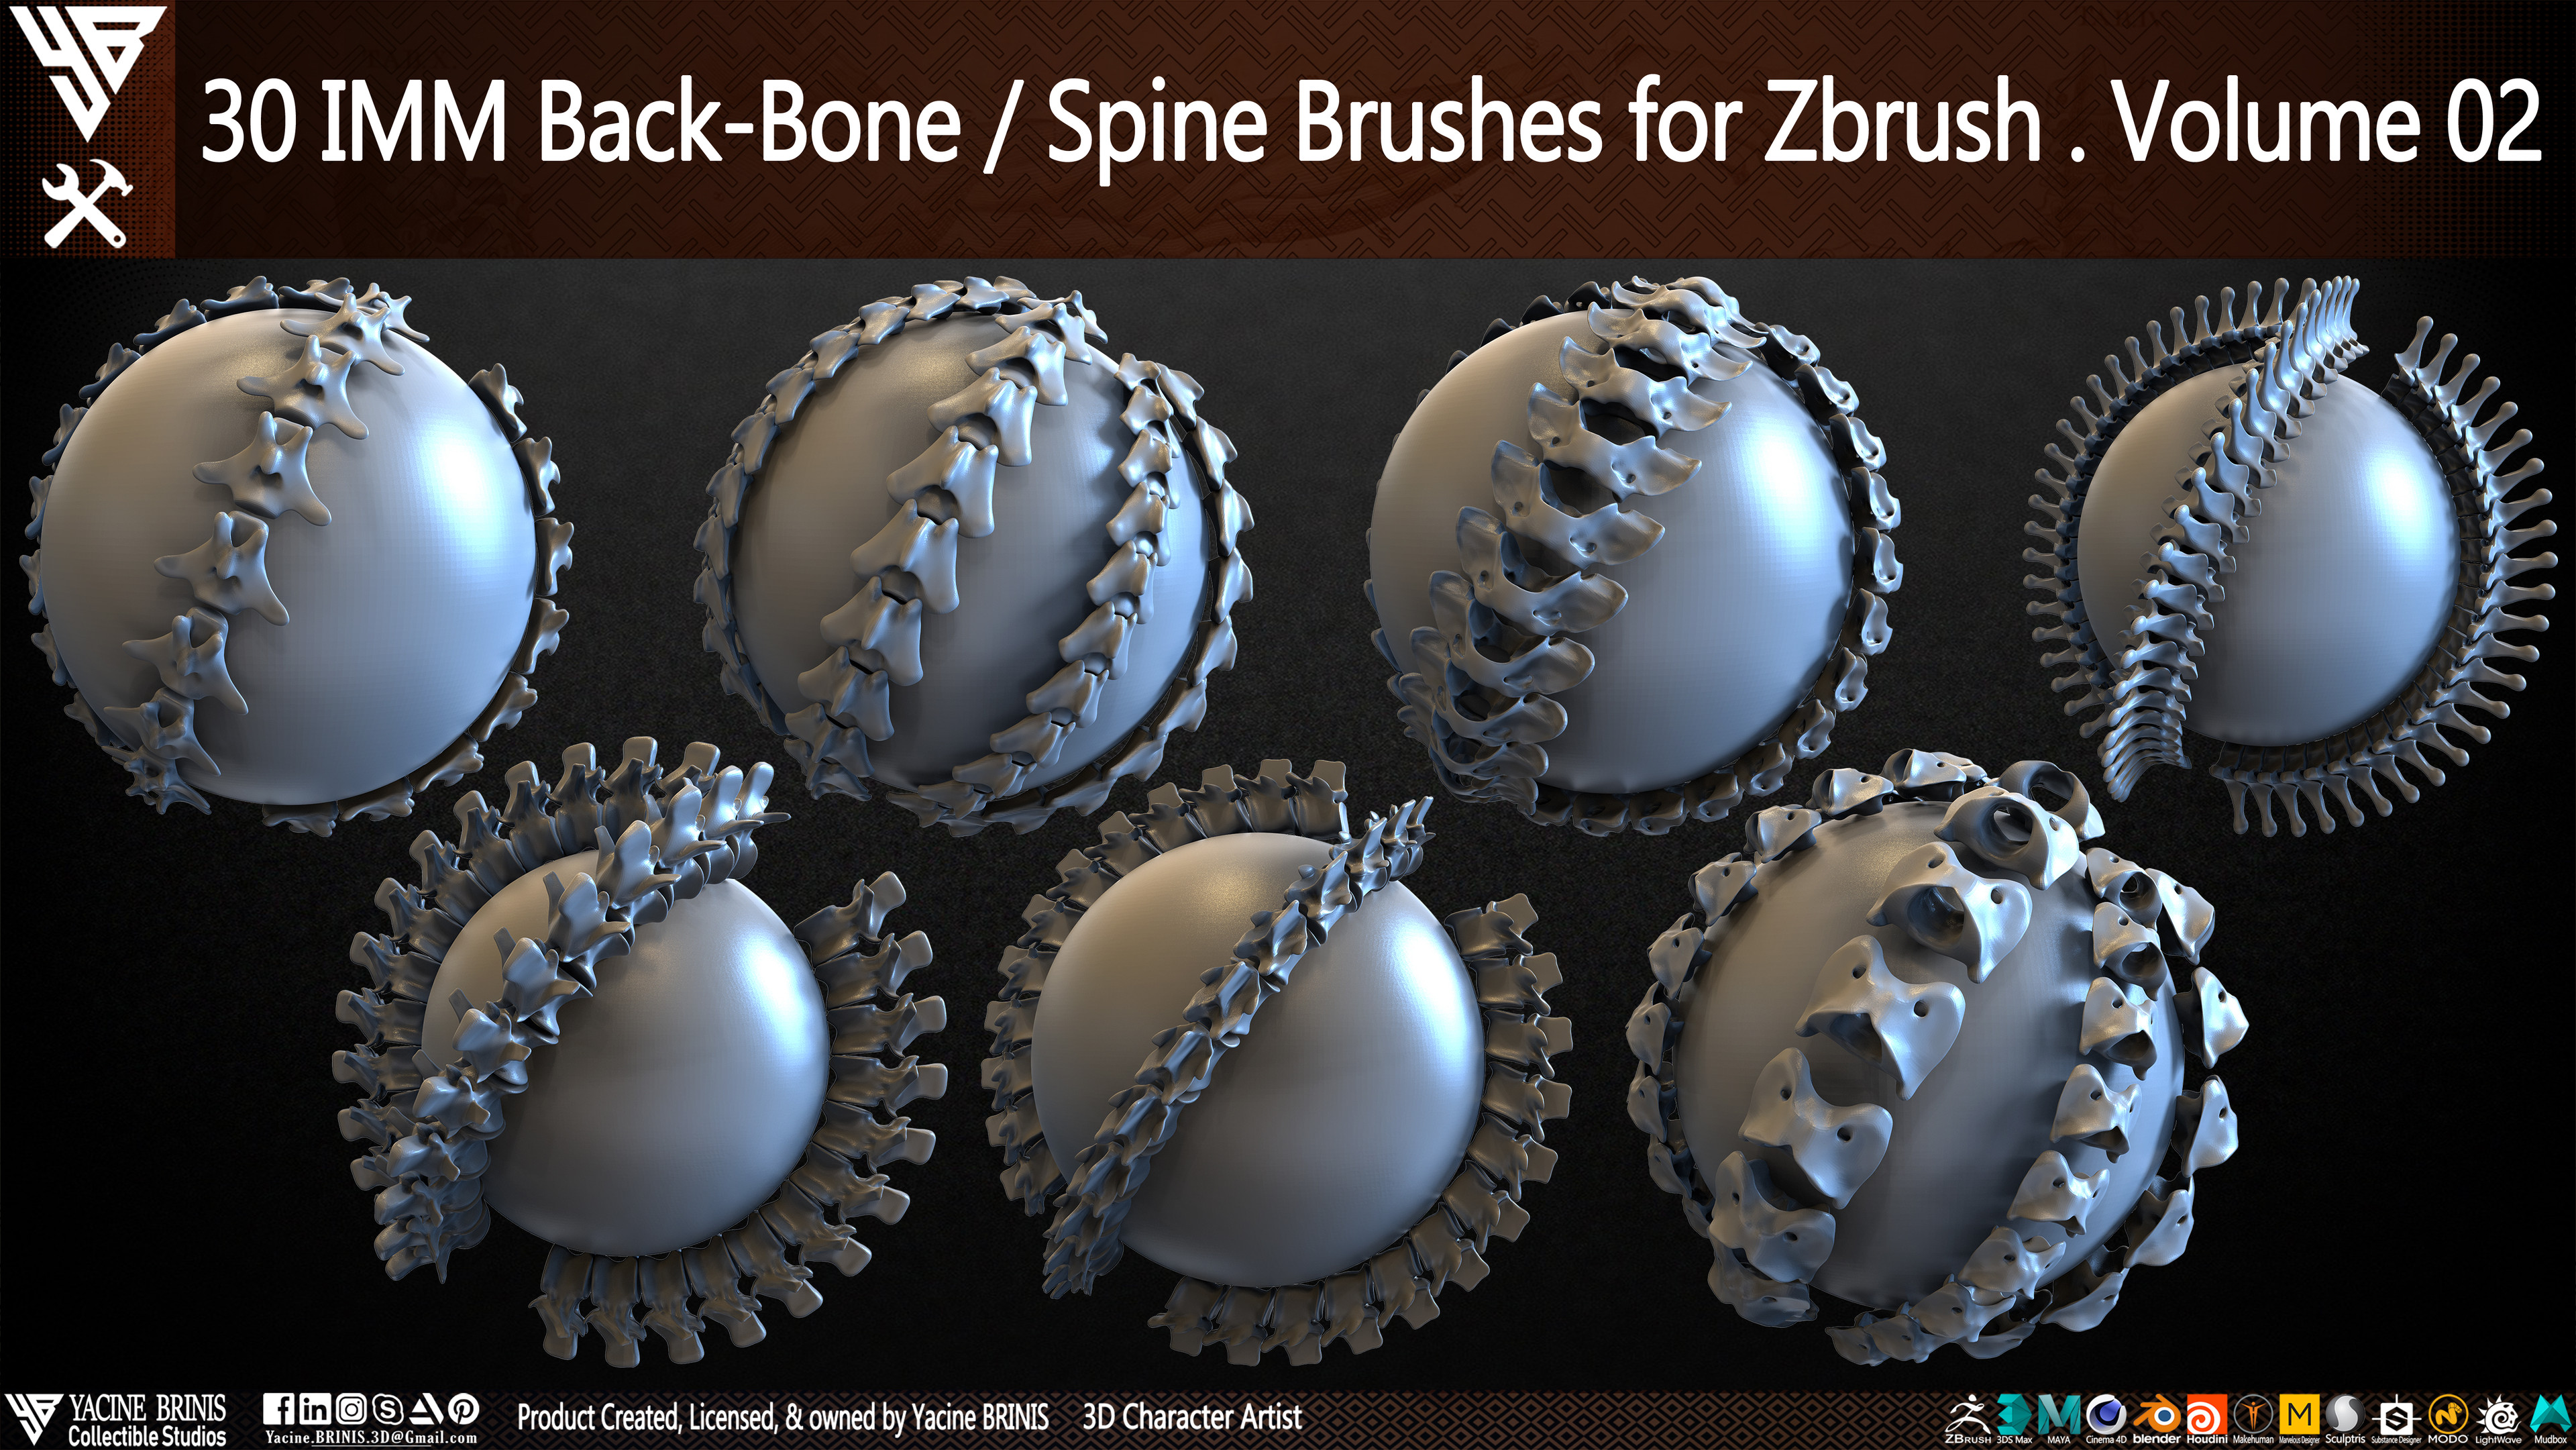 30 IMM Back-Bone - Spine Brushes for Zbrush Volume 02 Sculpted by Yacine BRINIS Set 001